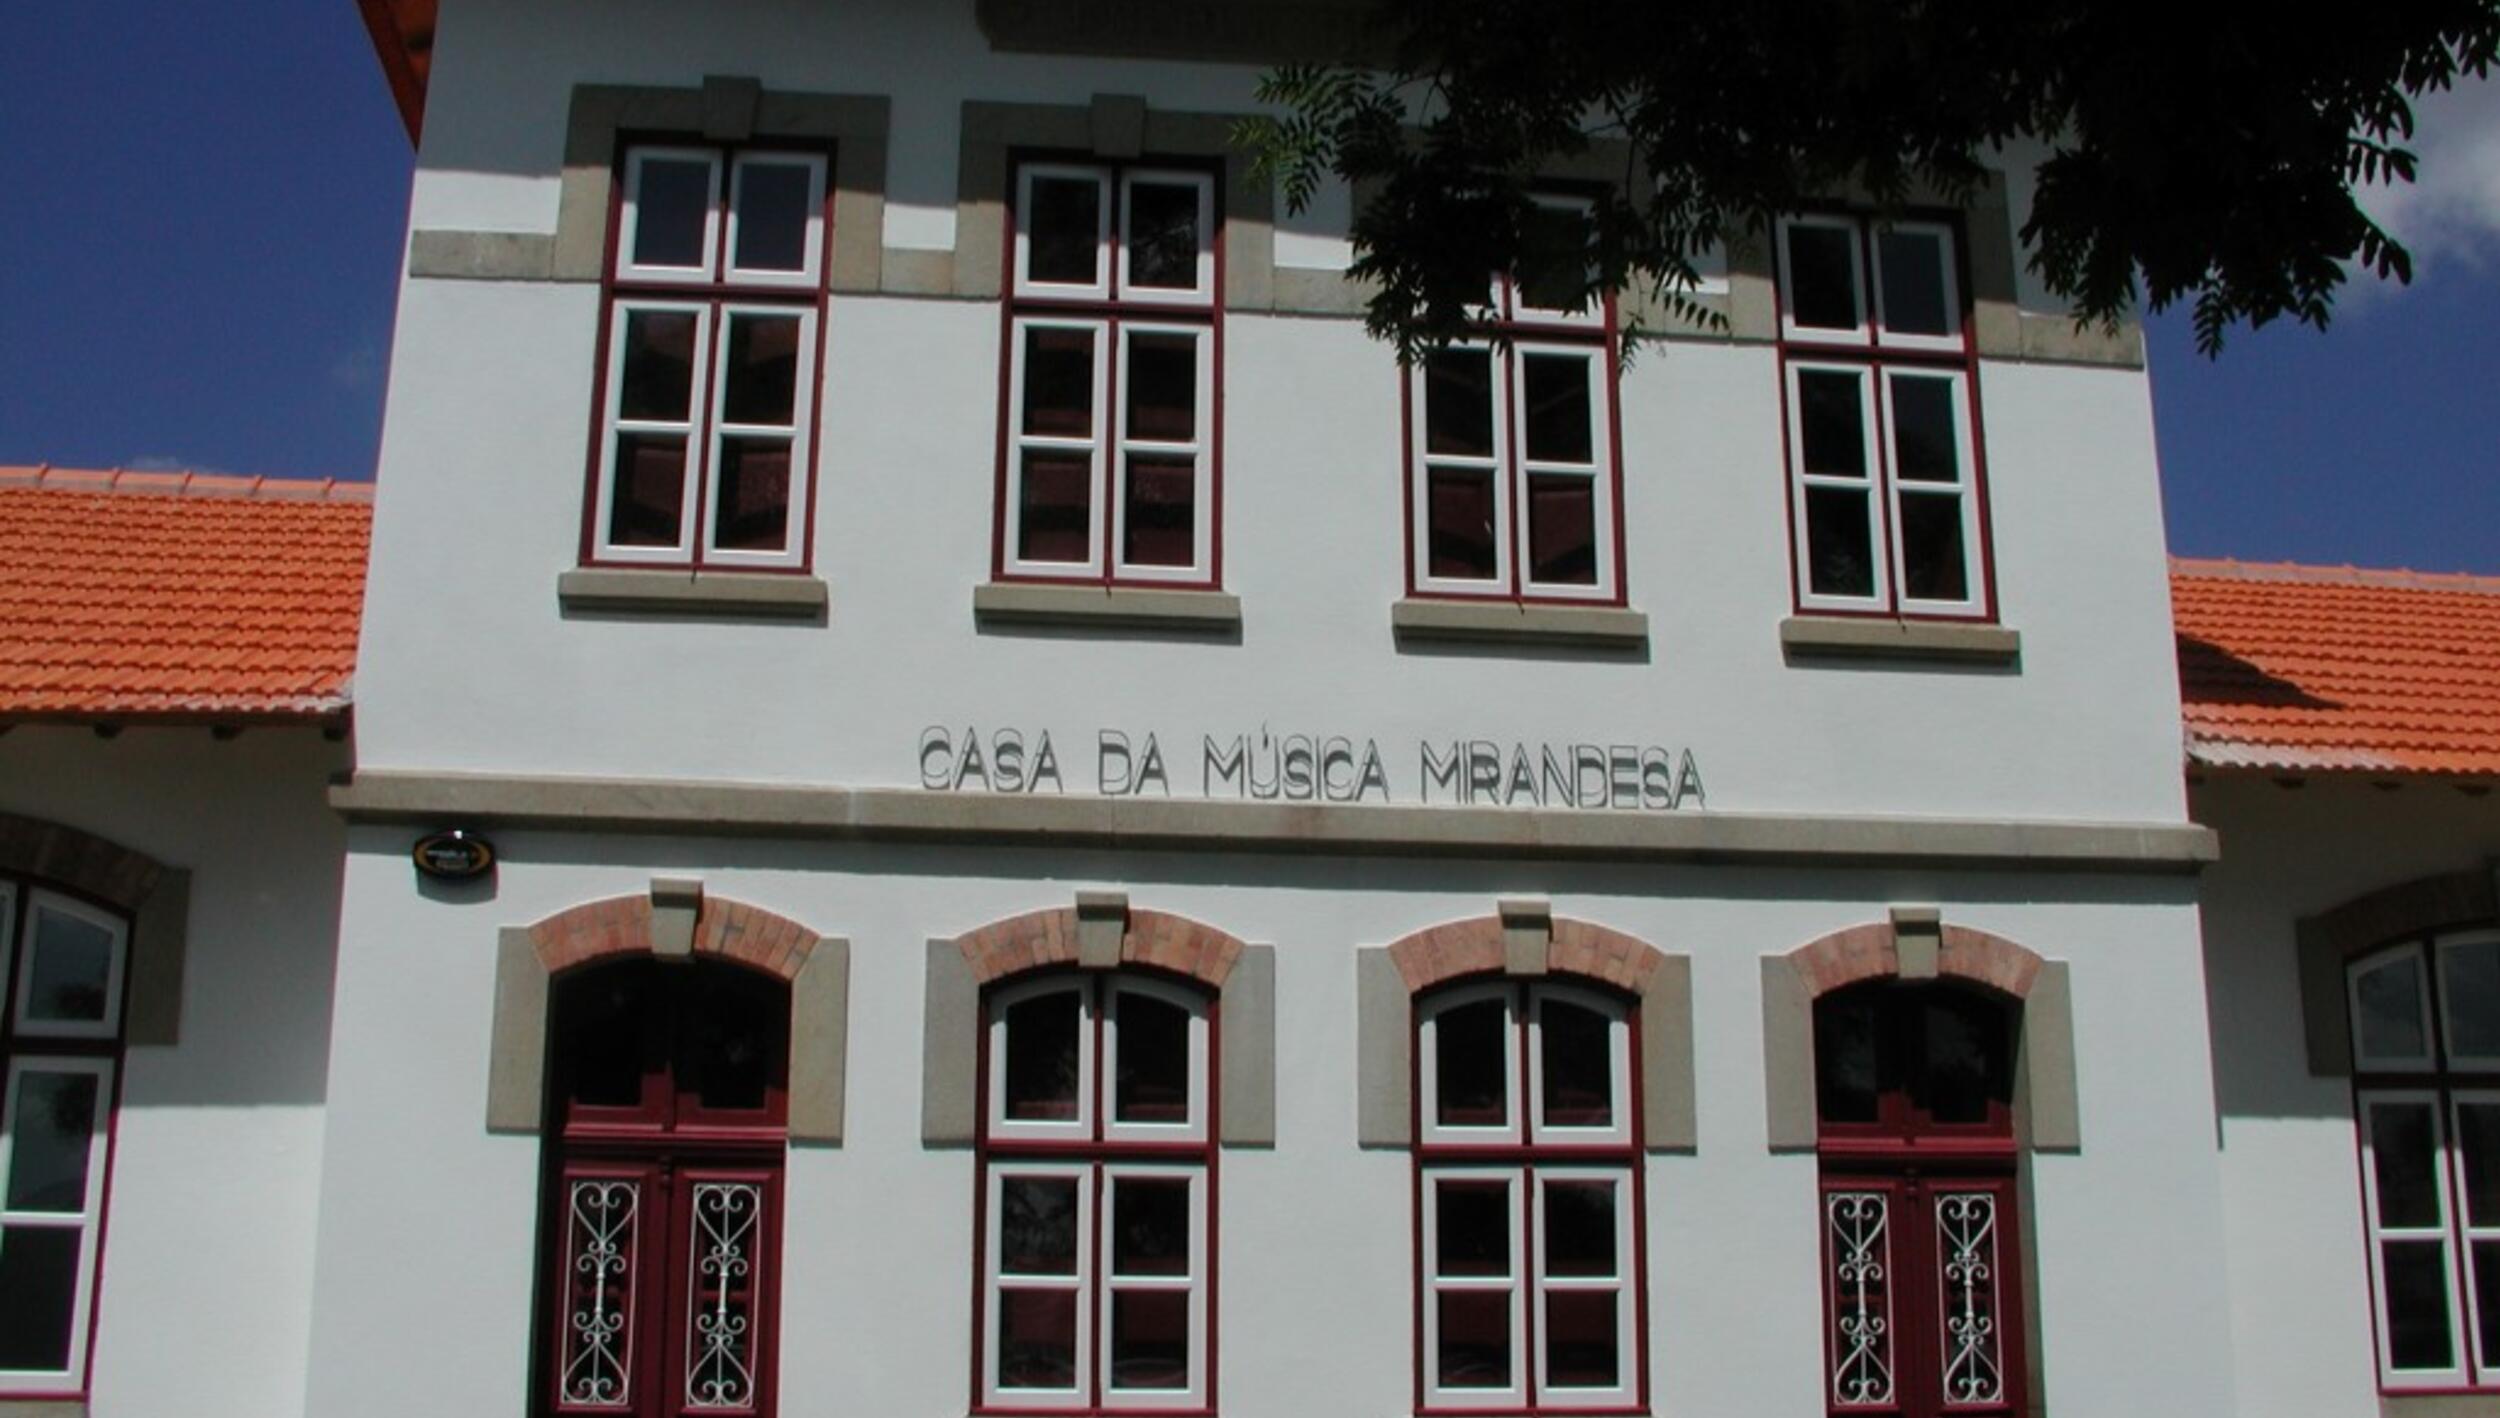 Casa da Música Mirandesa